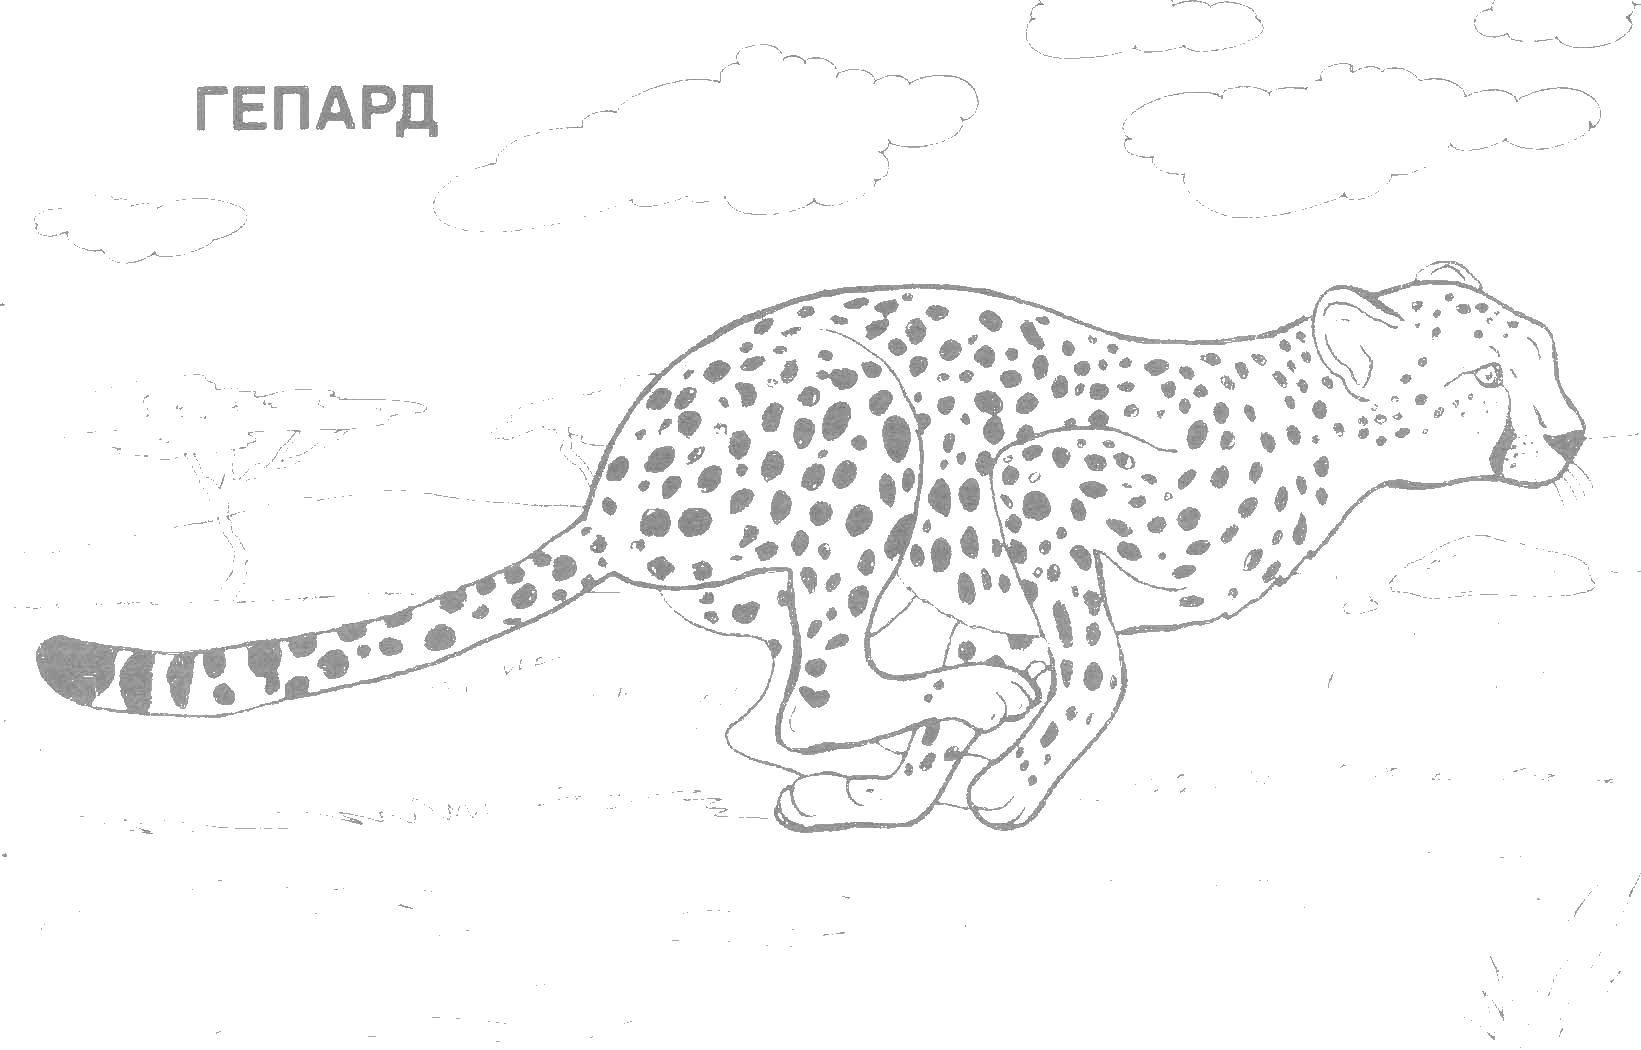 Coloring Cheetah. Category Wild animals. Tags:  wild animals, Cheetah, predator.